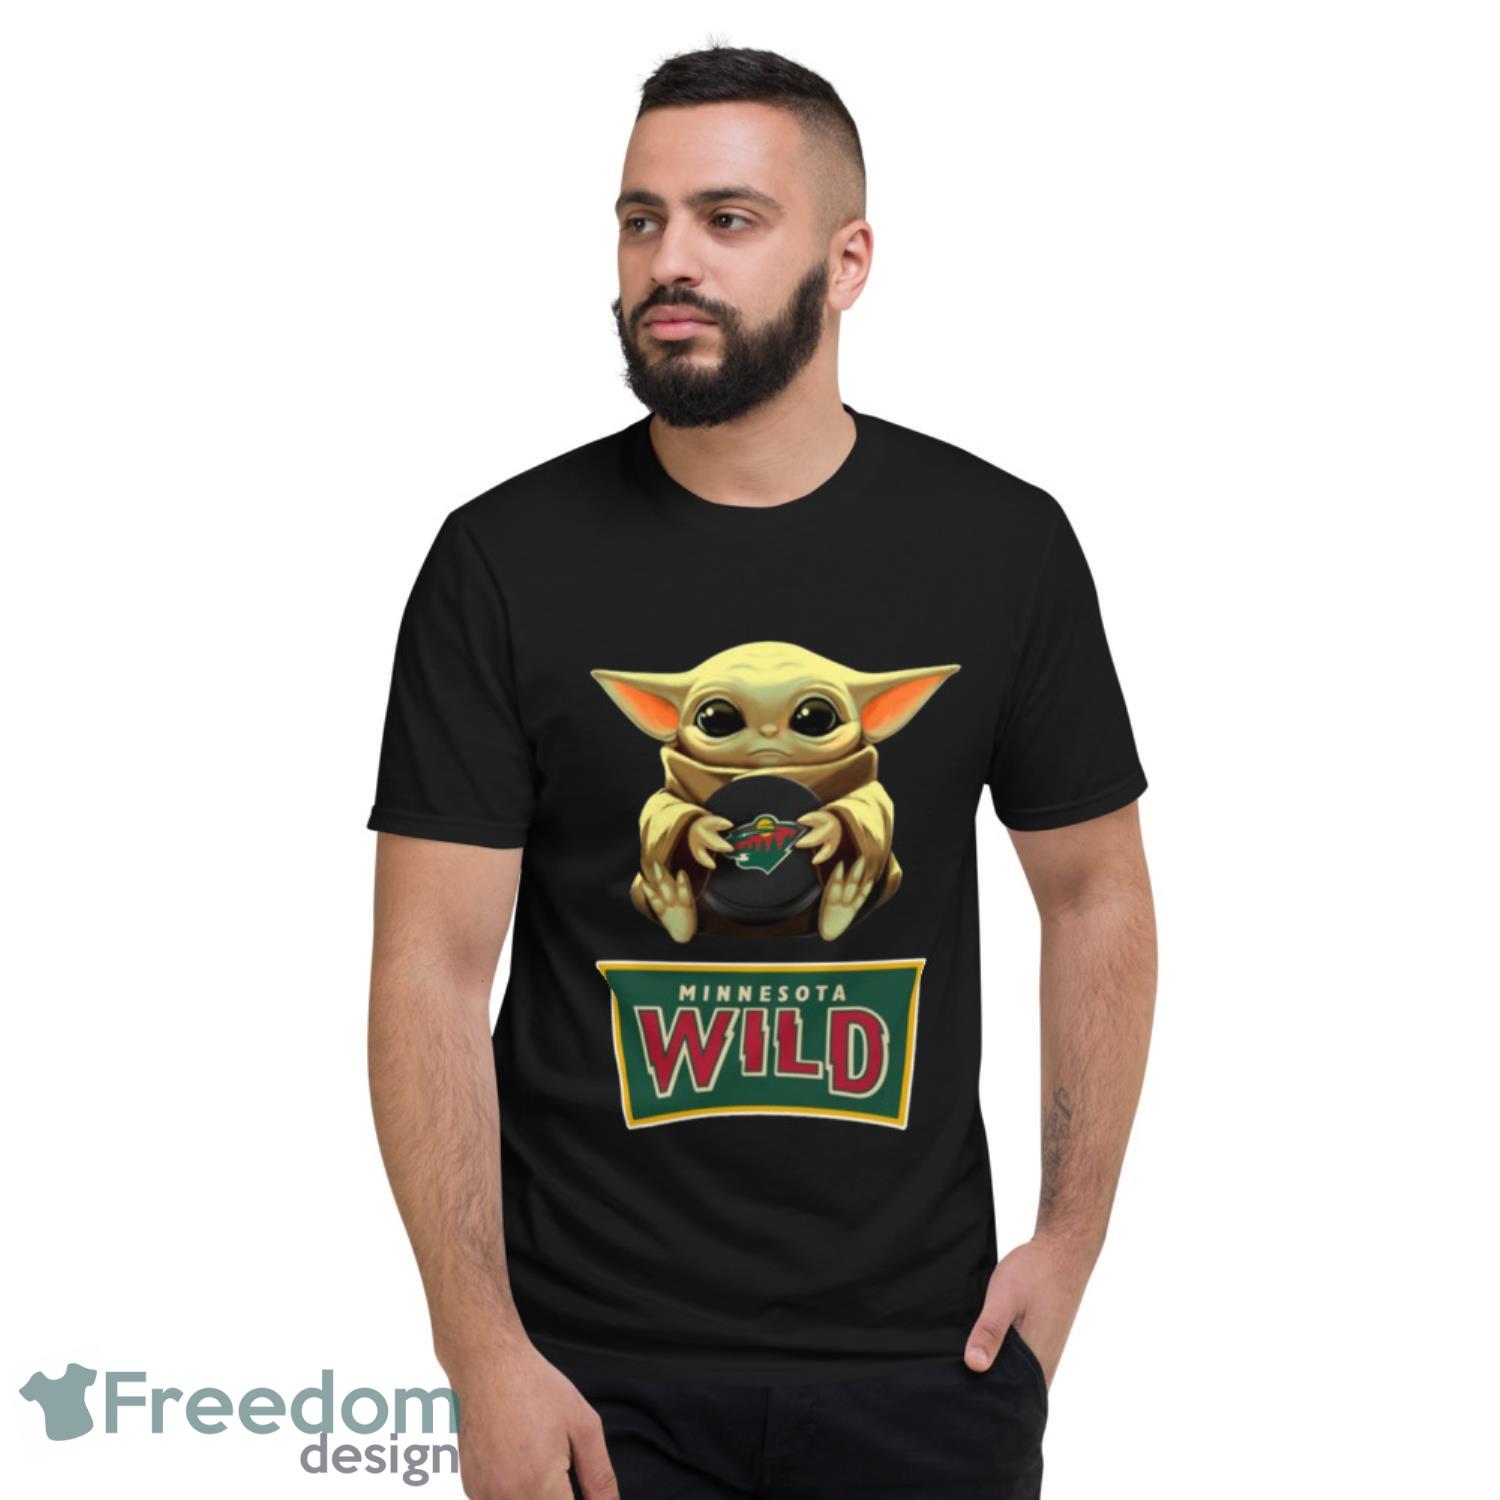 NHL Hockey Minnesota Wild Star Wars Baby Yoda Shirt T Shirt